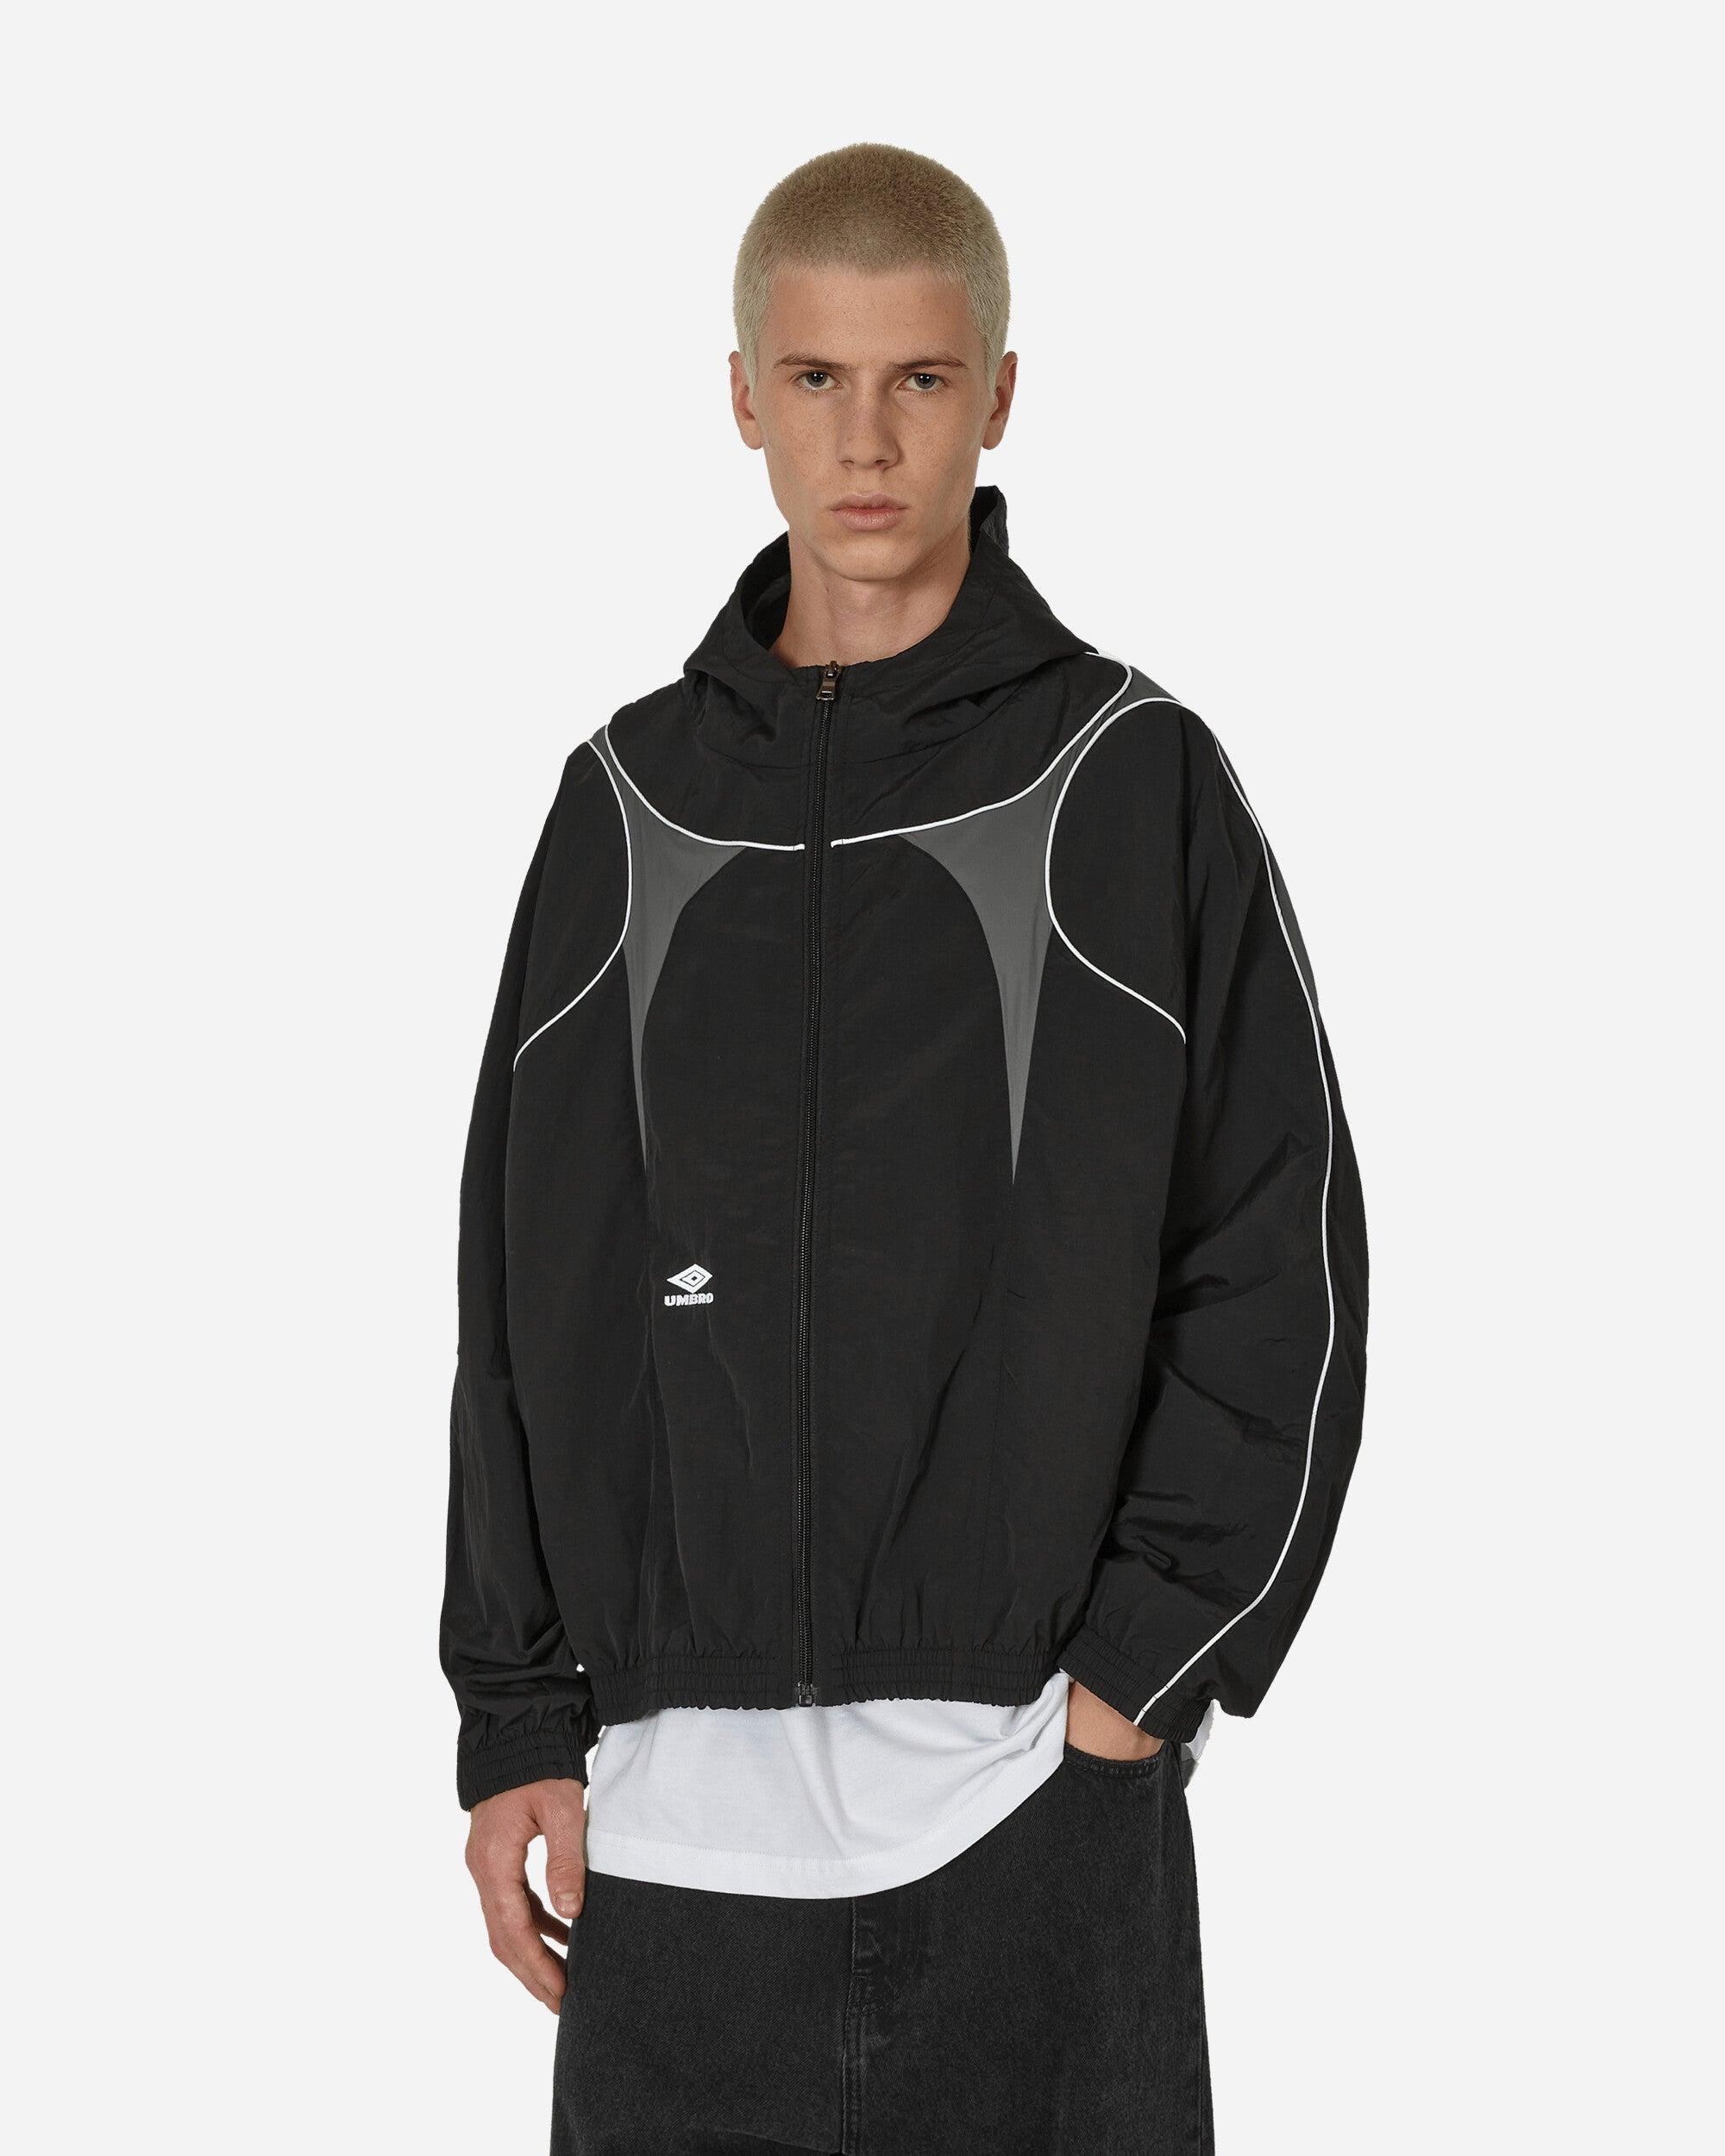 Umbro Advanced Track Jacket in Black for Men | Lyst